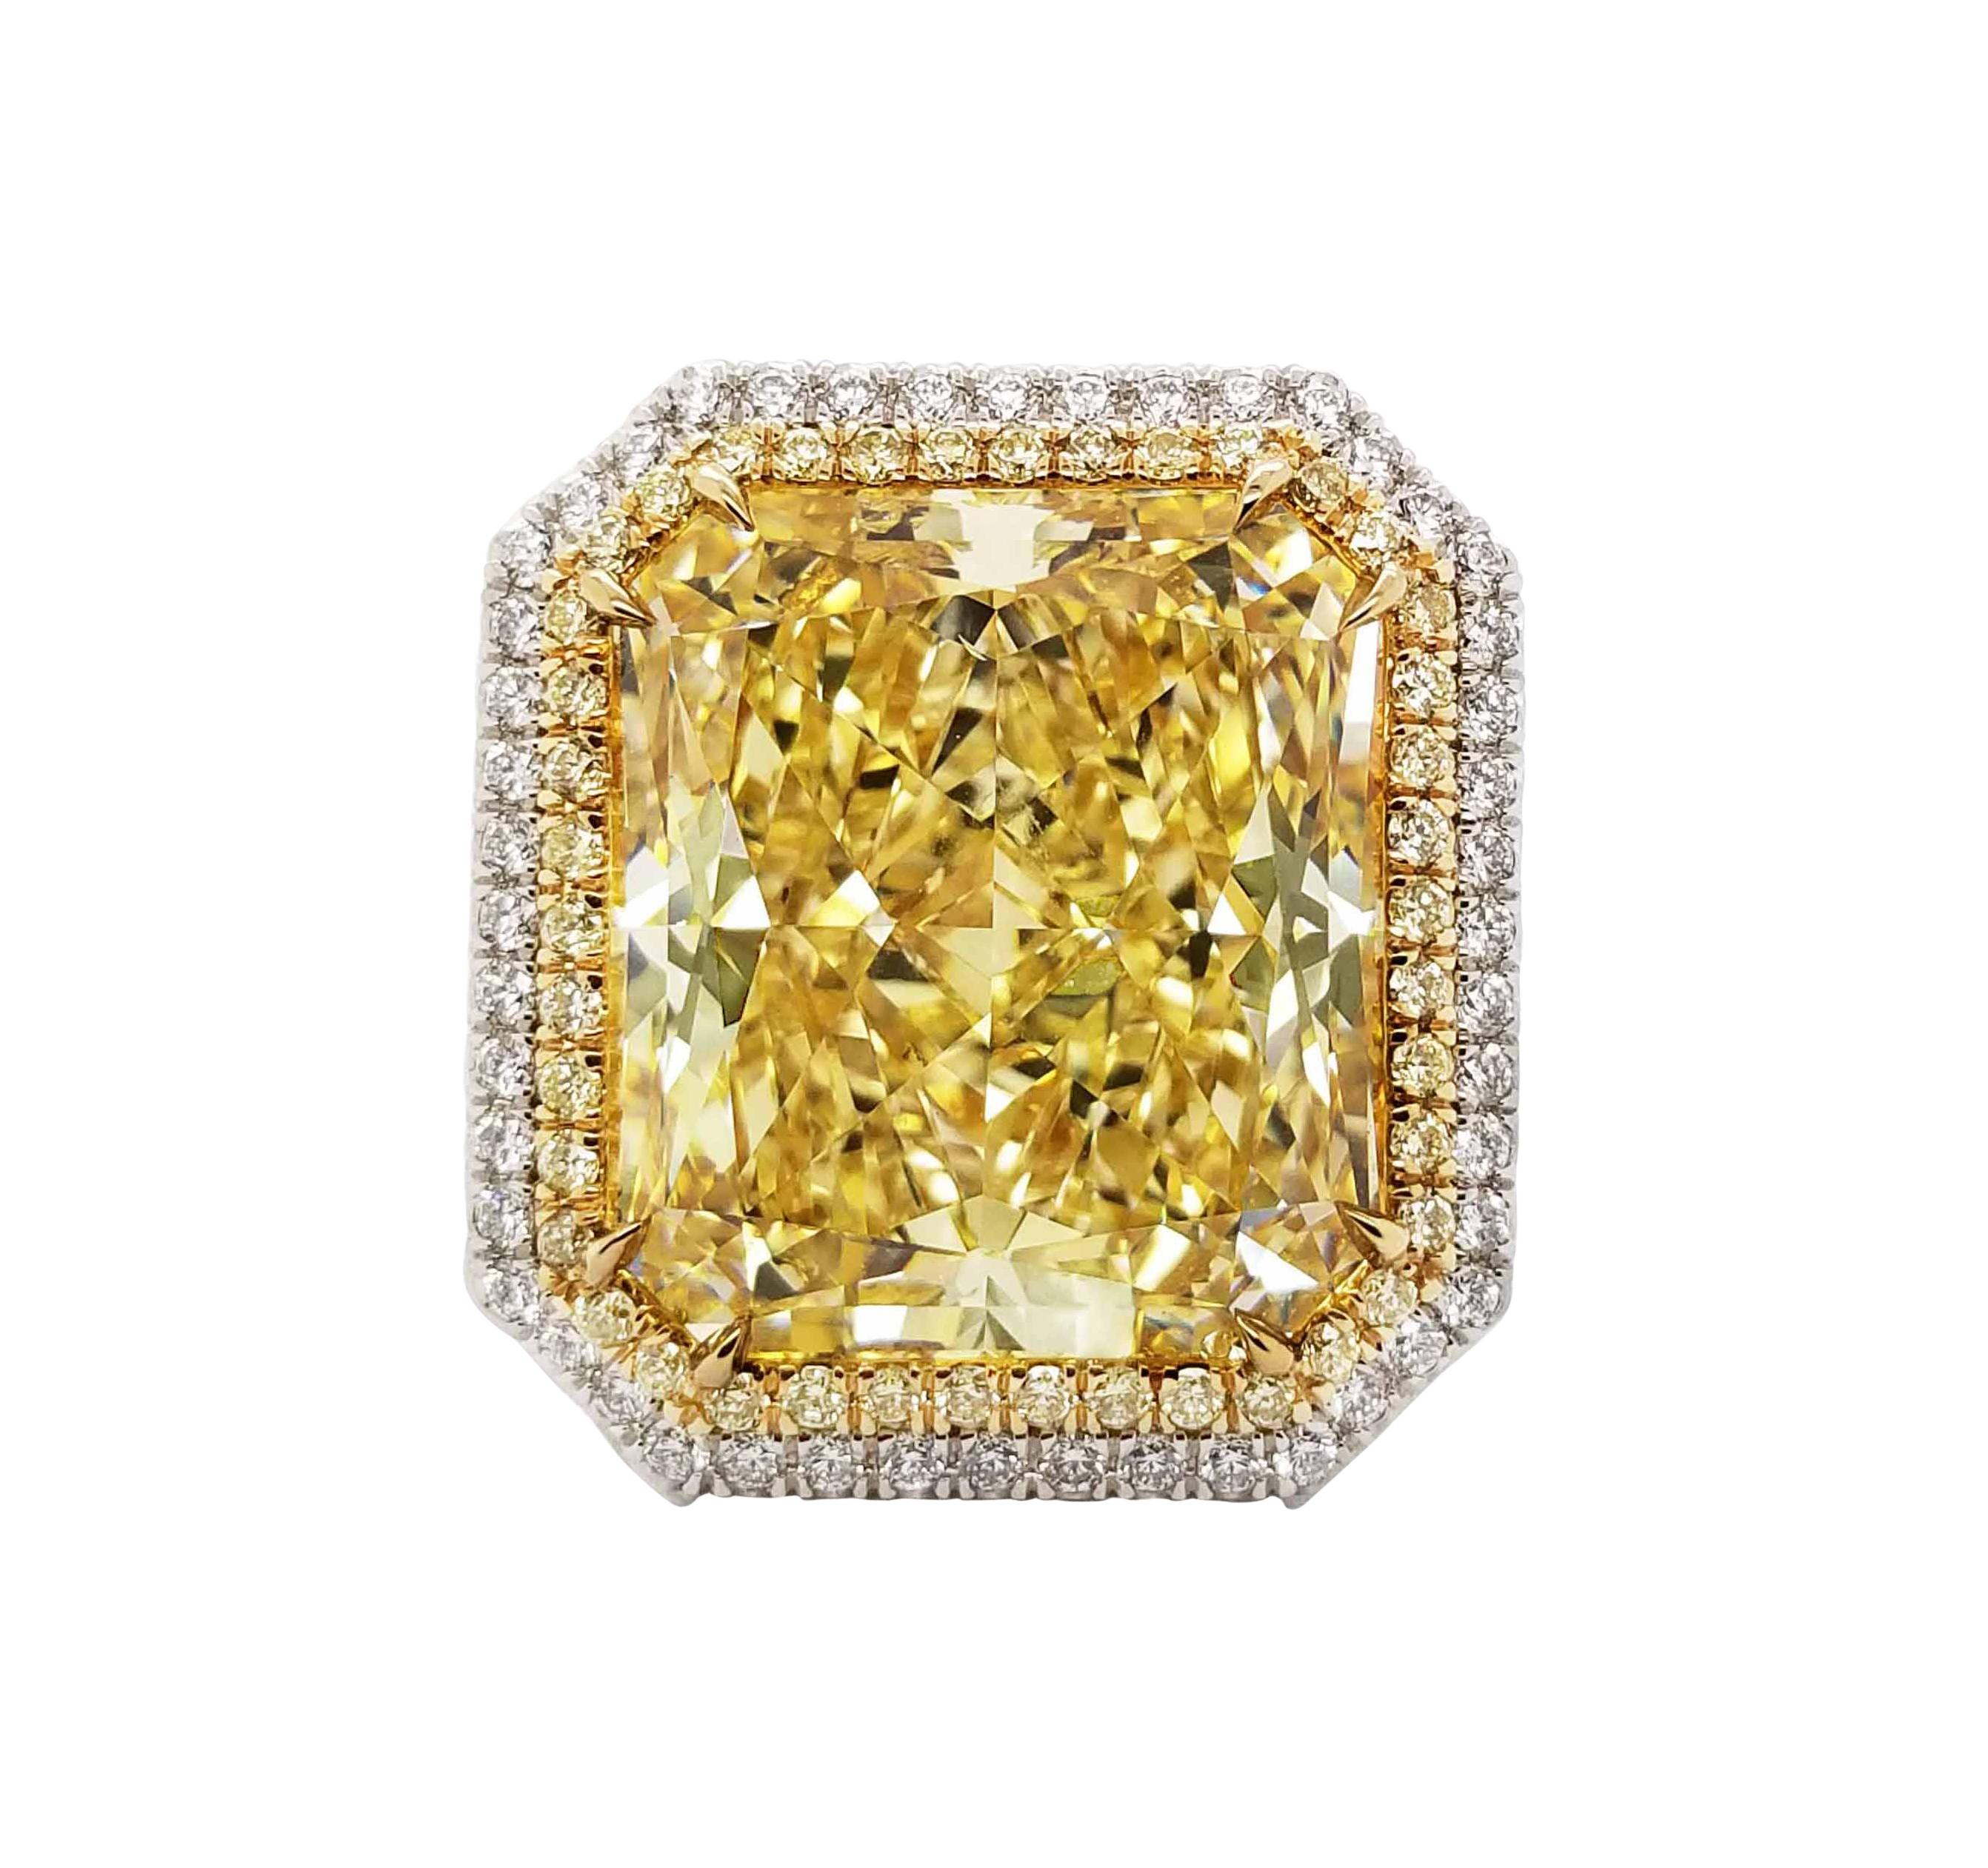 SCARSELLI 24 Carat Fancy Yellow Diamond Ring in Platinum GIA